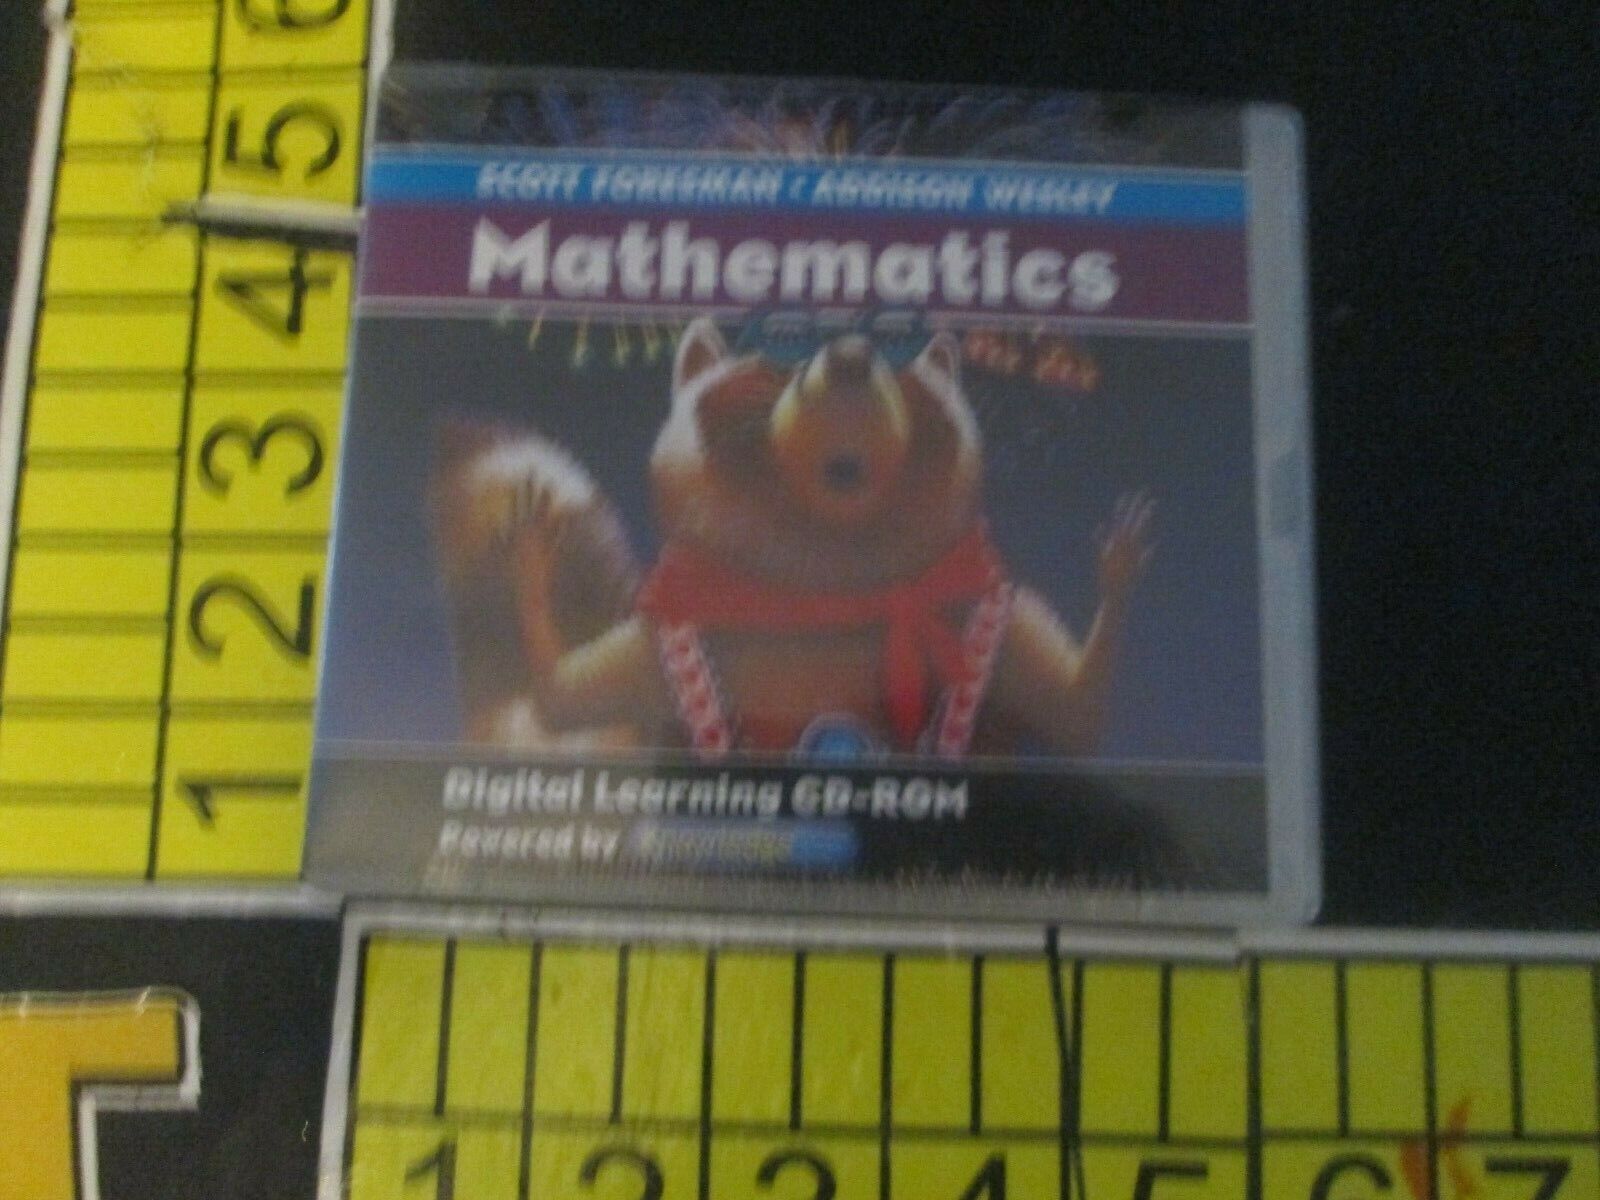 Scott Foresman - Addison Wesley - Mathematics Digital Learning CD-ROM